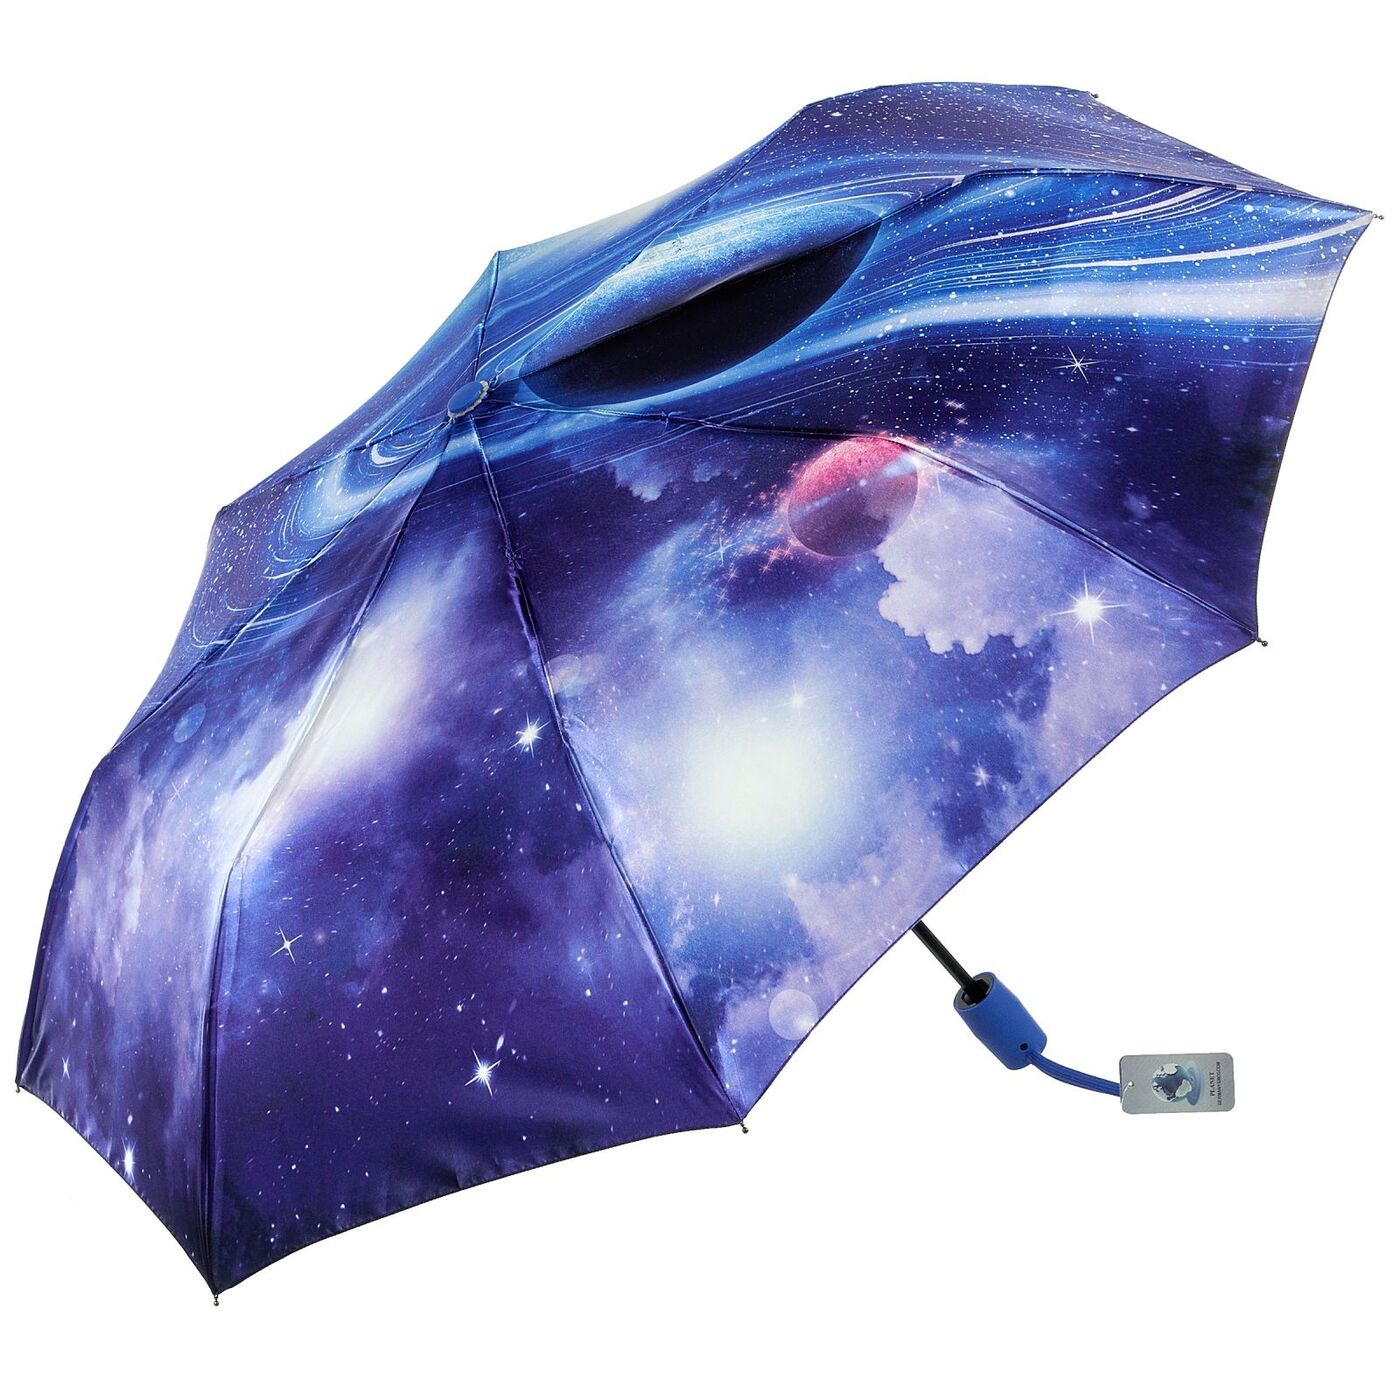 Где купить зонтик. Зонт Пасио Амбрелла. Зонт Metaco арт. '9610-005b. Зонт женский g10 (Lux). Зонты ZC АНТИЗОНТВ.